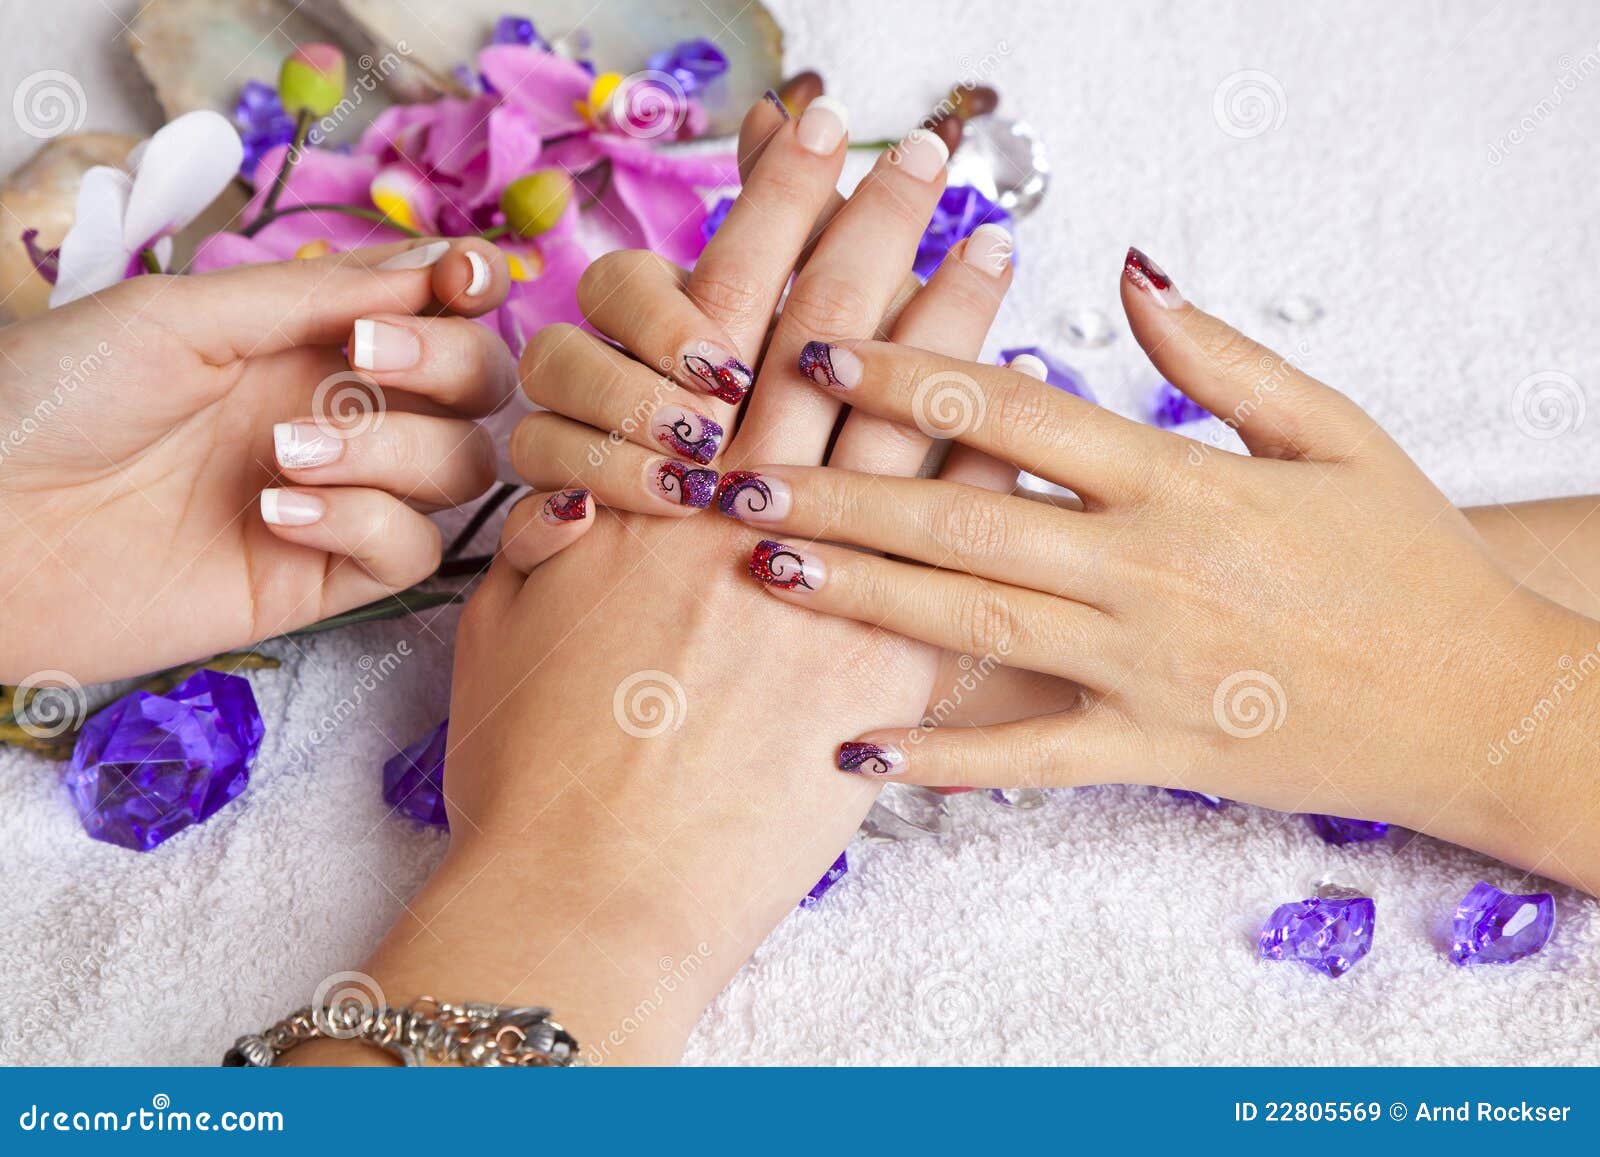 beauty concept - acrylic fingernails